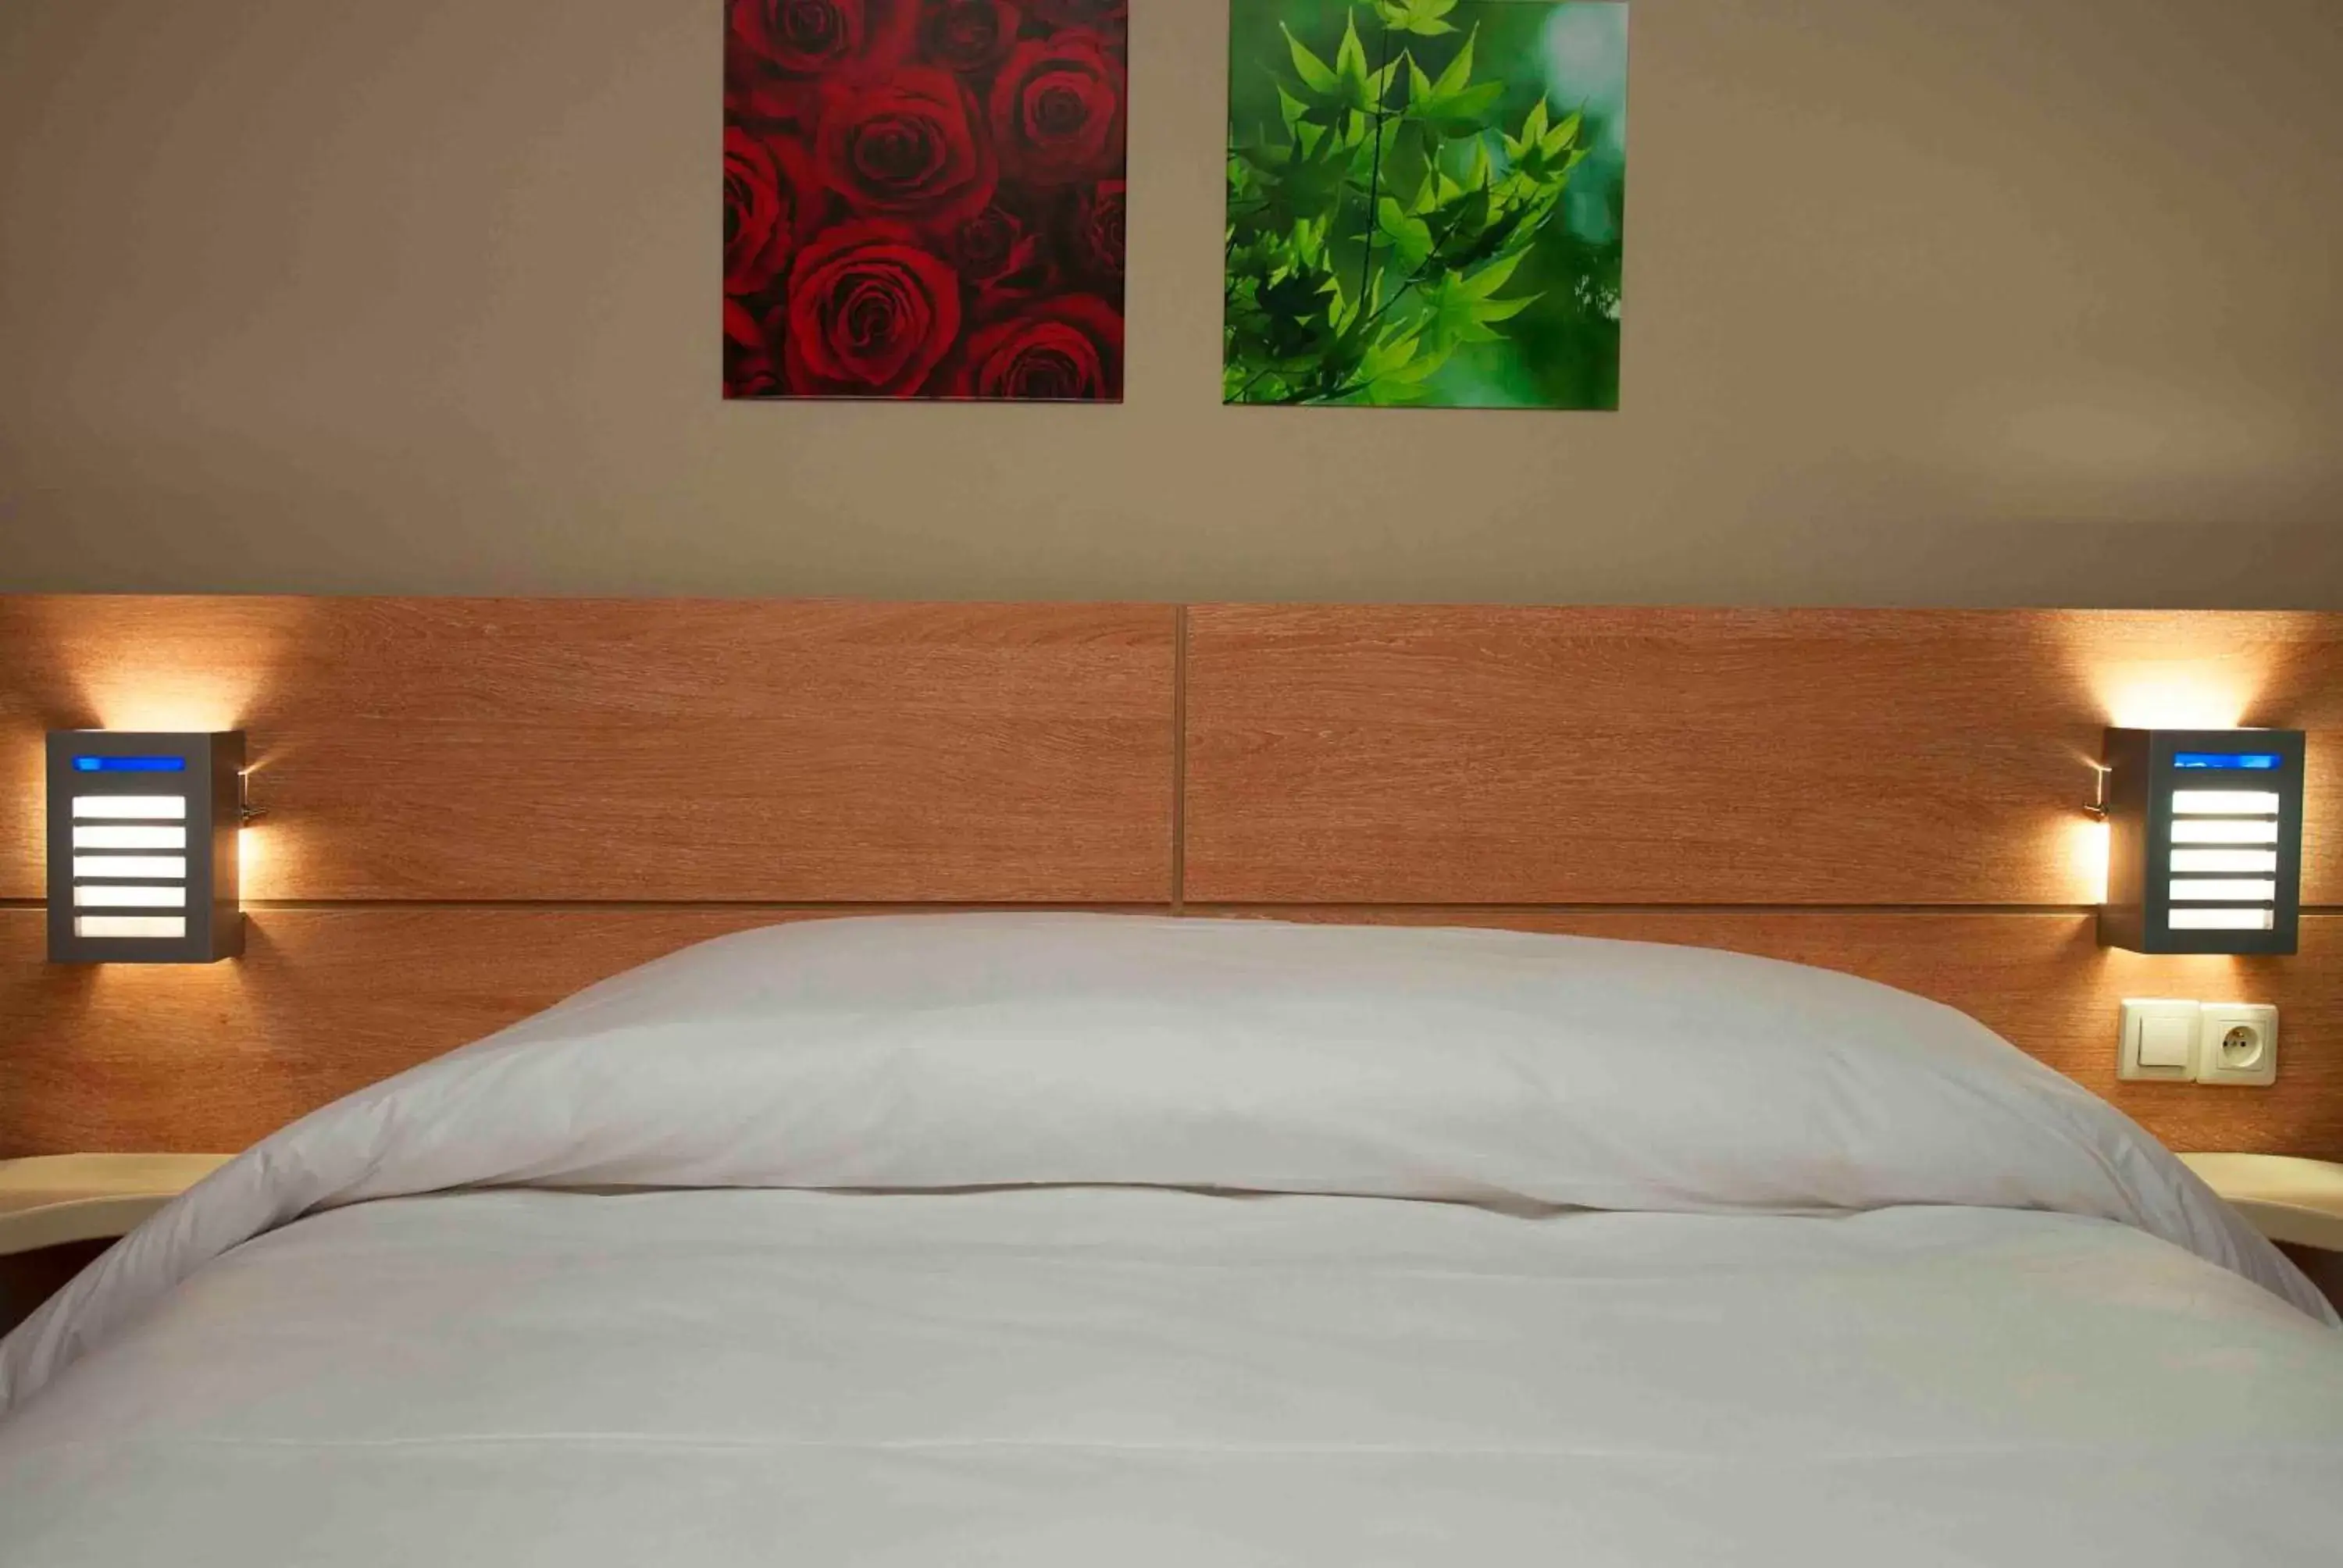 Bed in Manzil Hotel